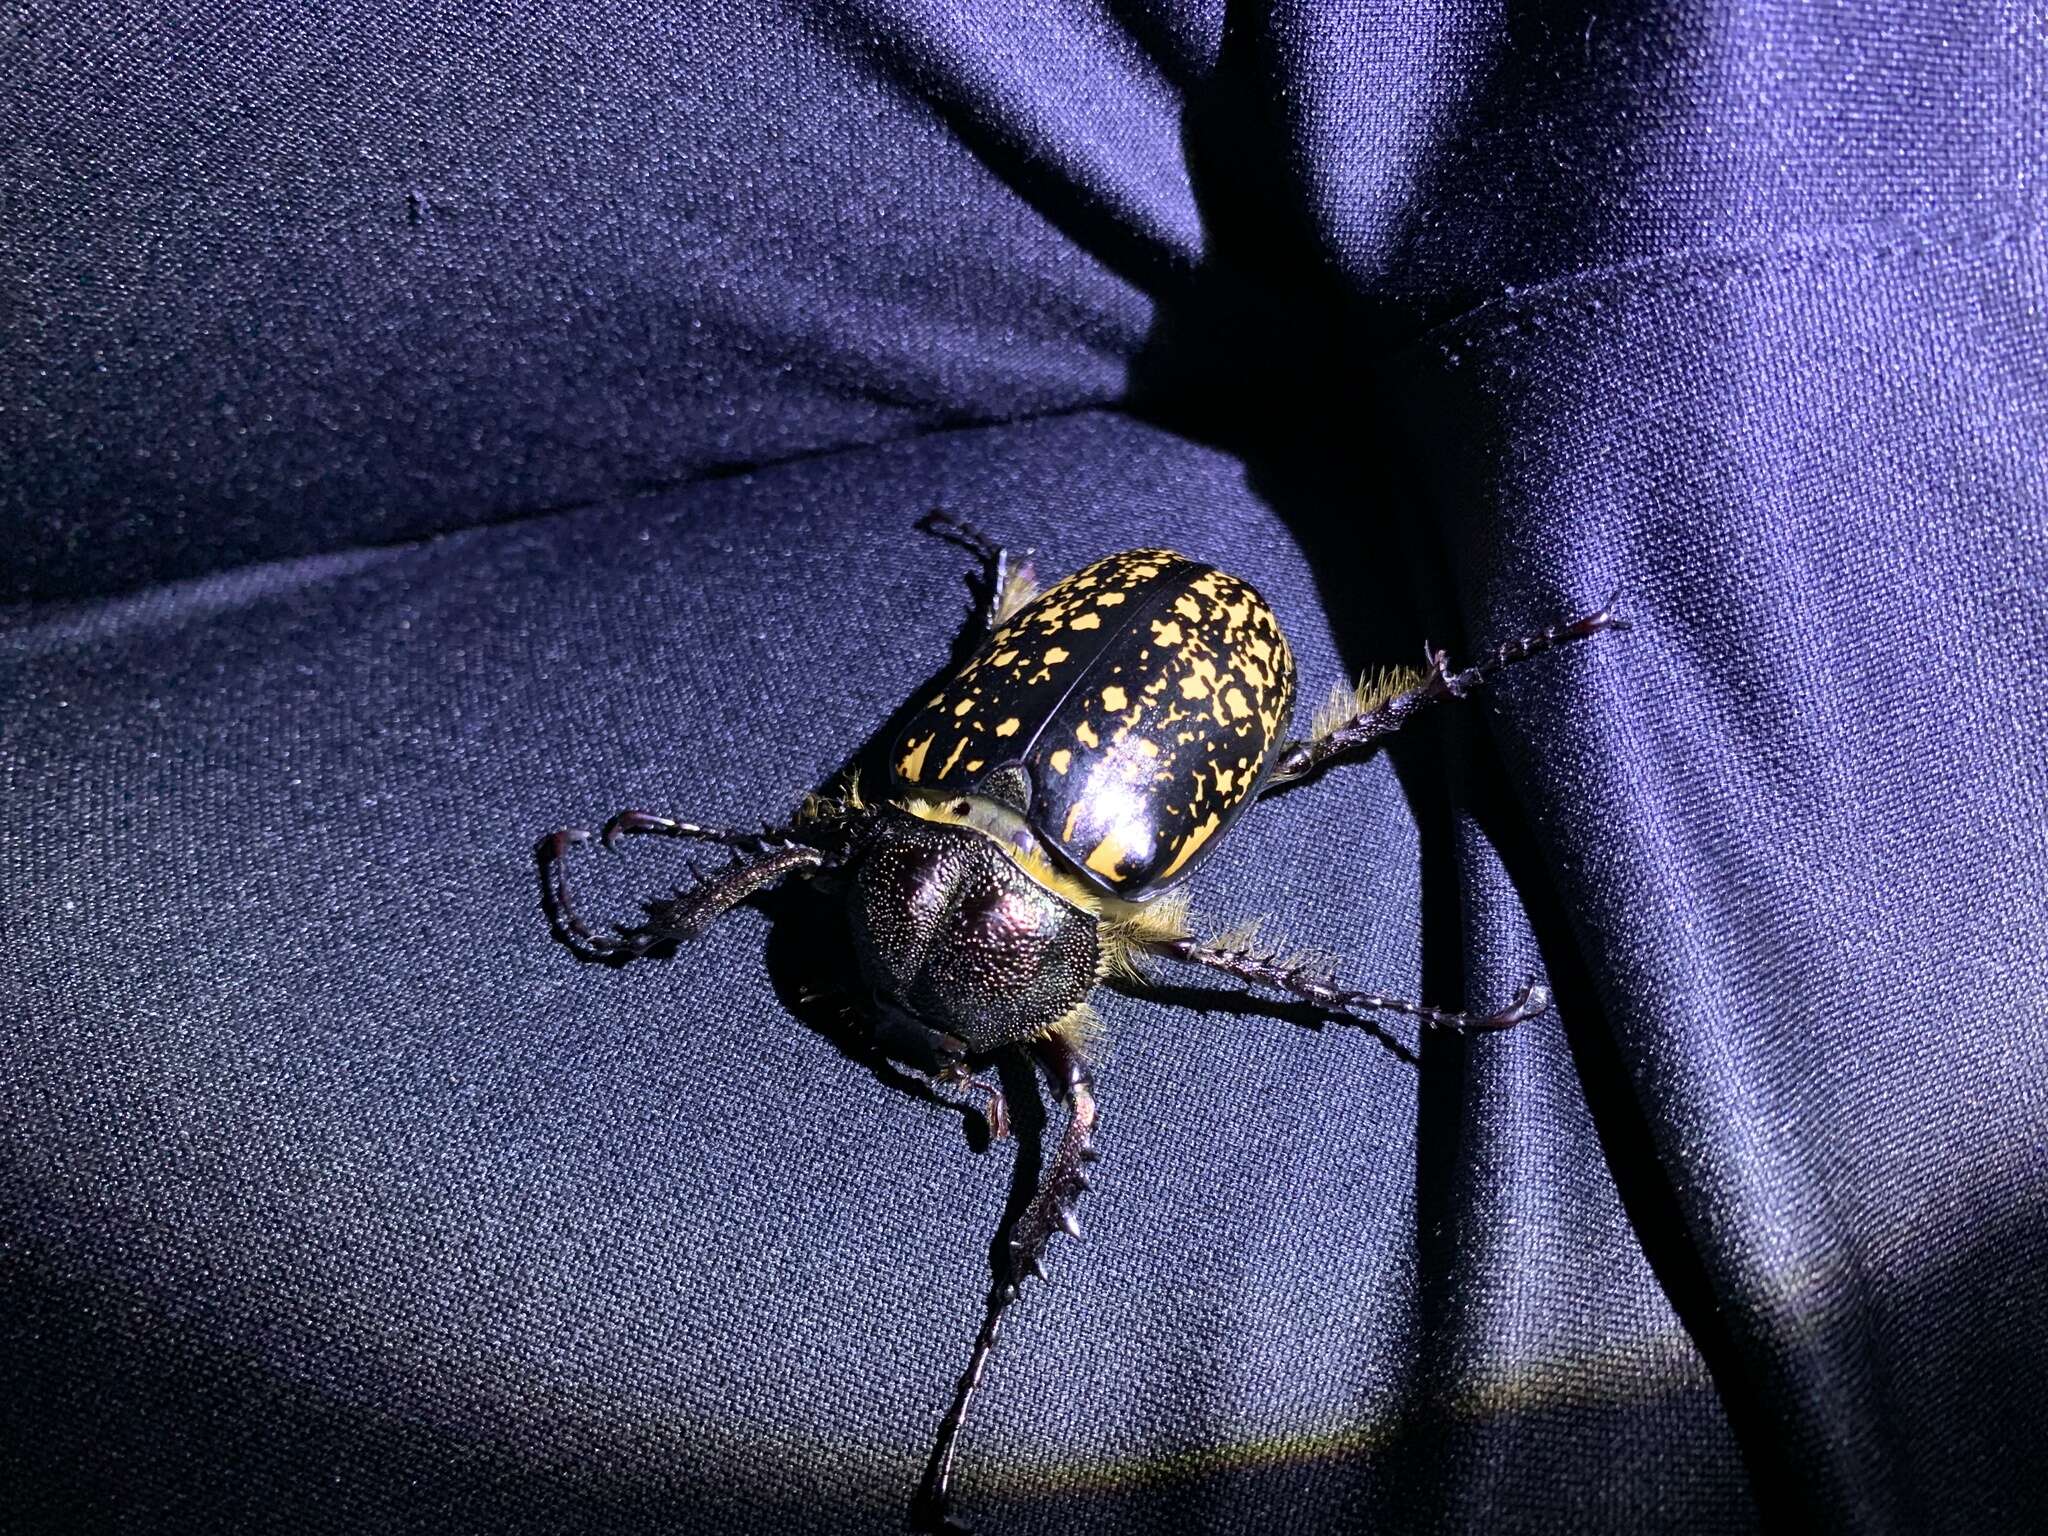 Image de Euchiridae